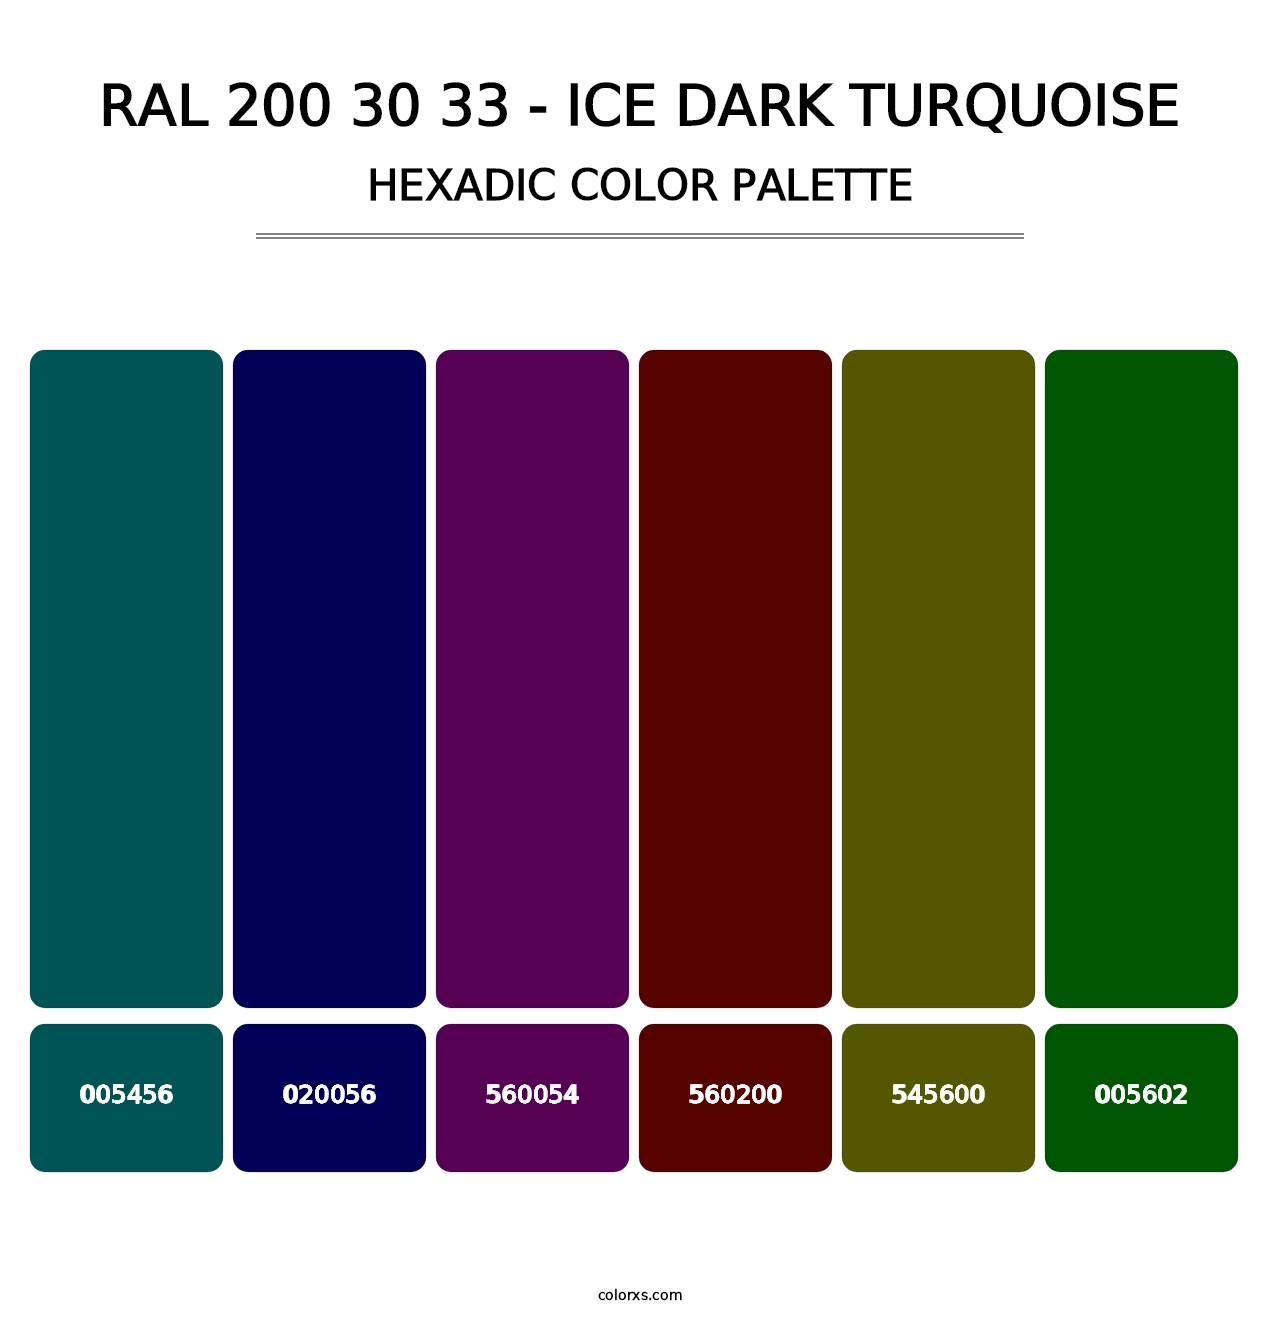 RAL 200 30 33 - Ice Dark Turquoise - Hexadic Color Palette